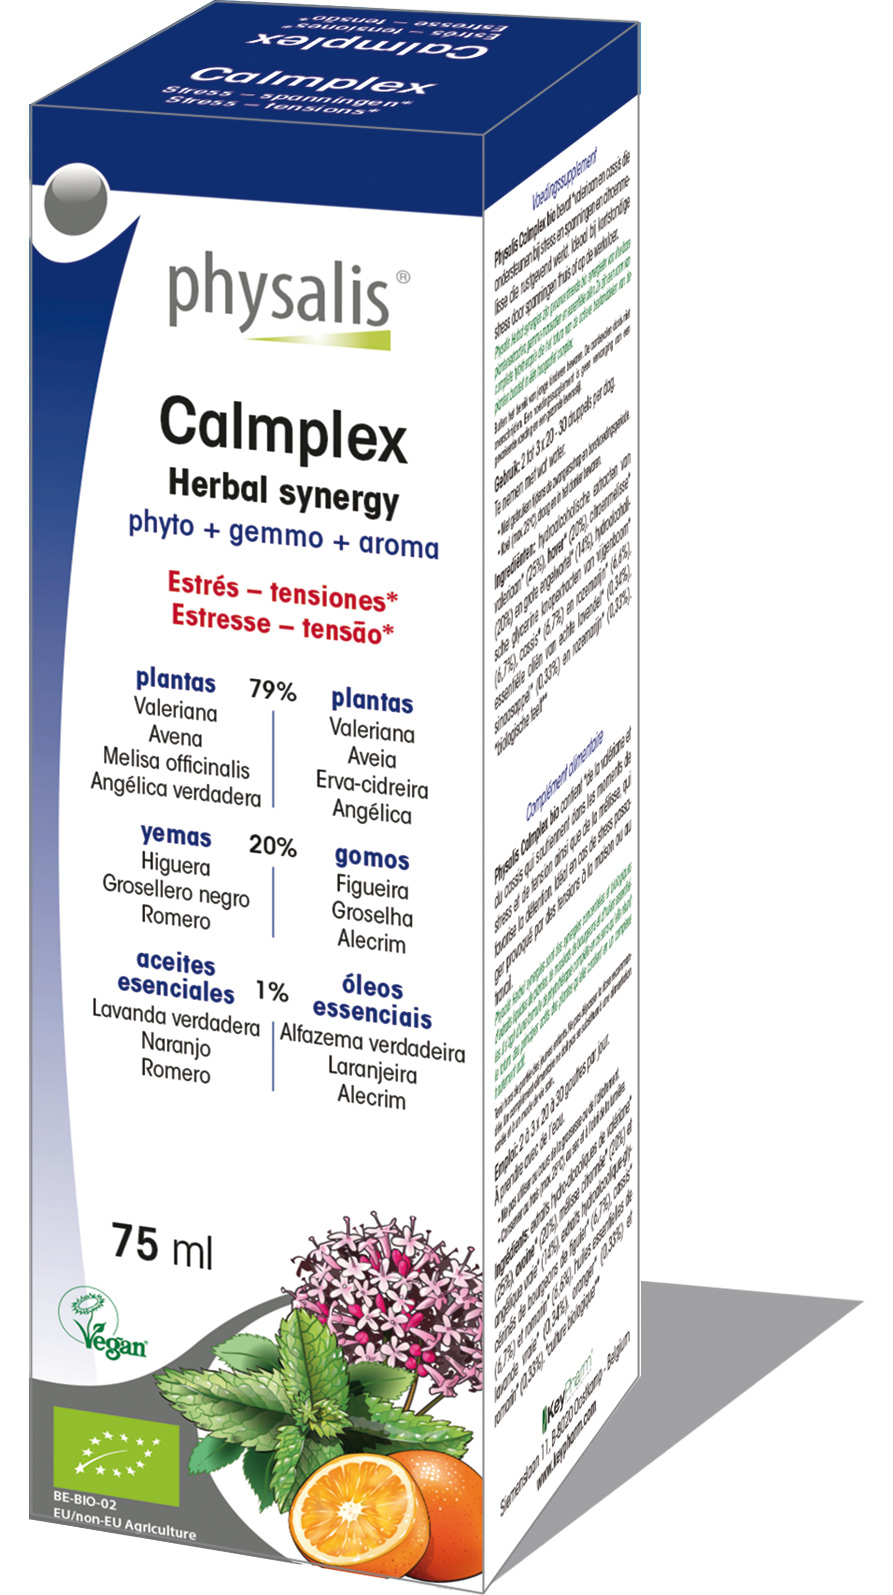 Calmplex - Herbal synergy